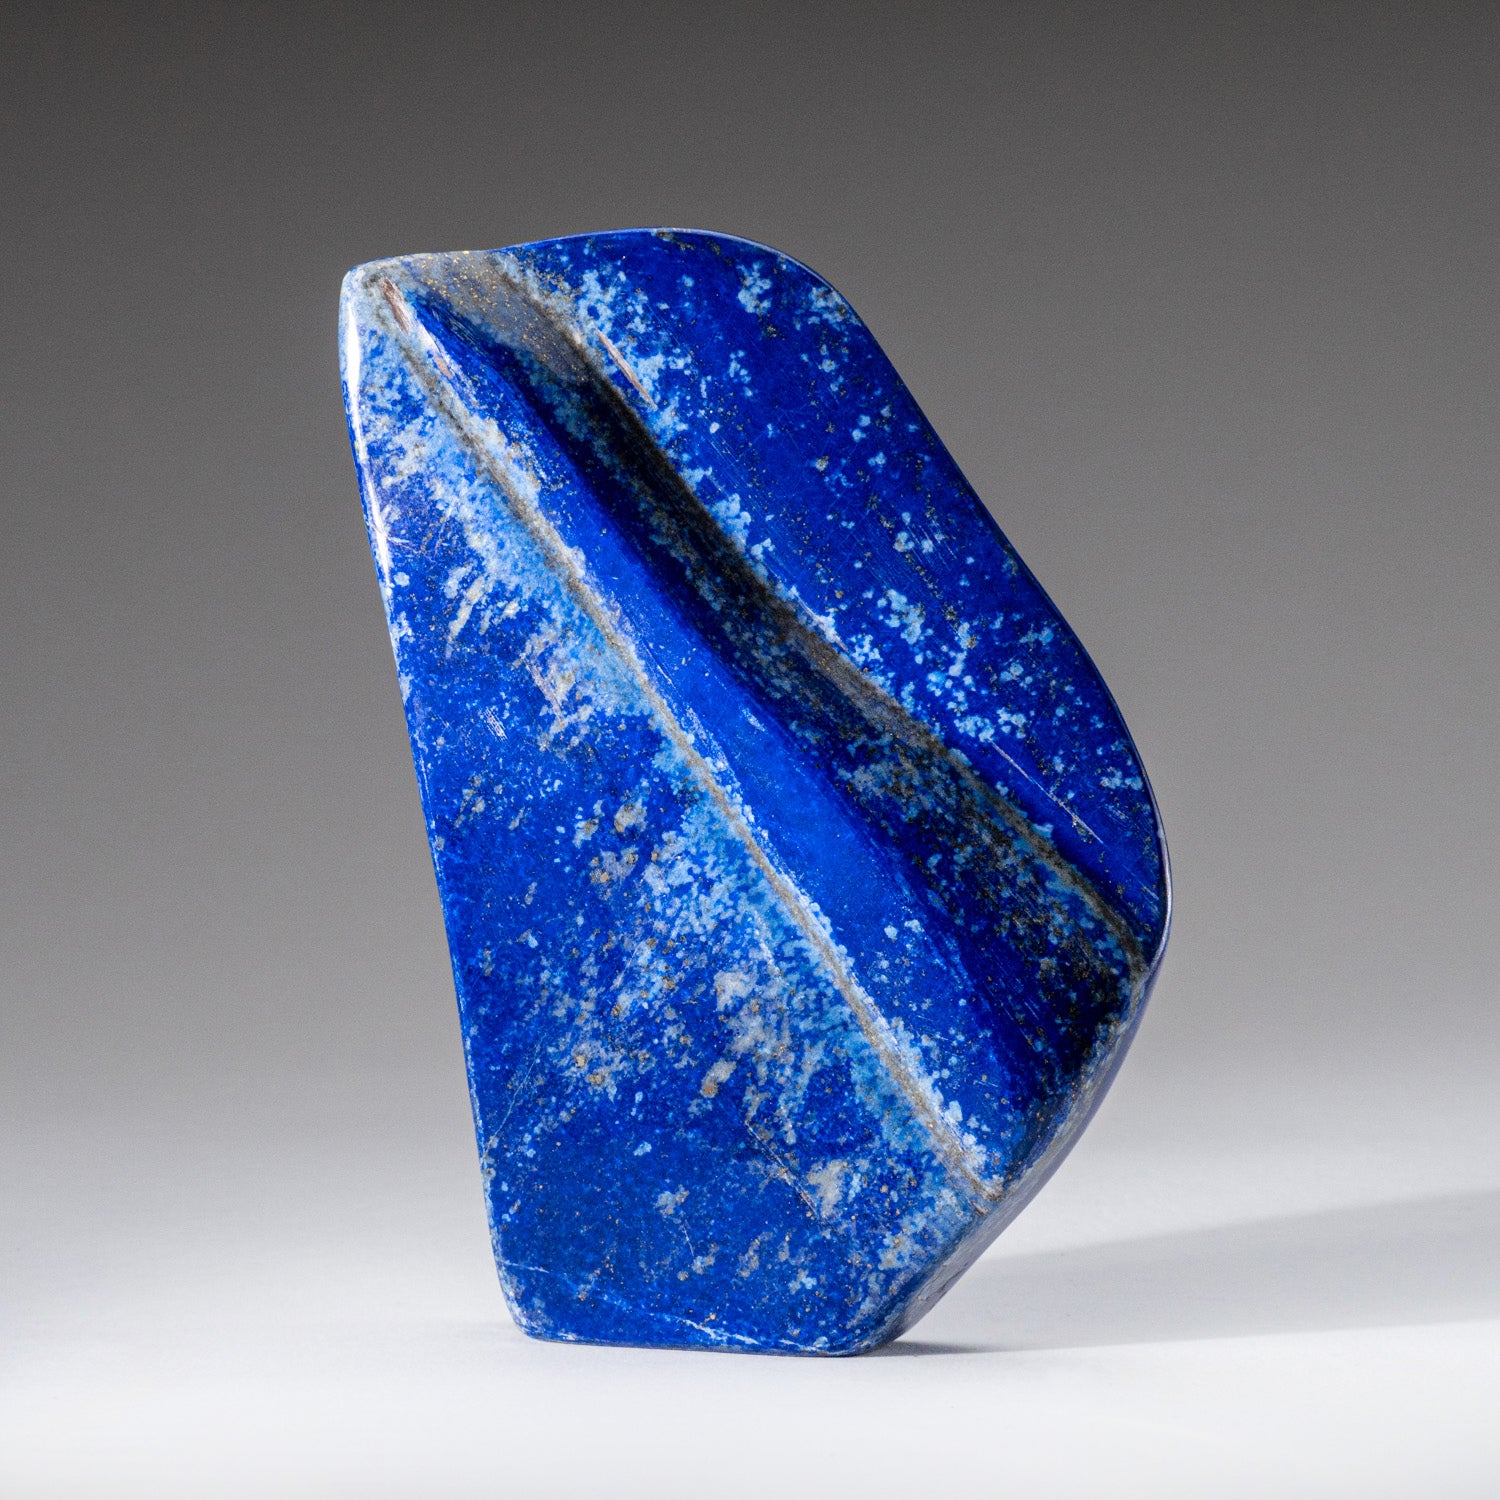 Polished Lapis Lazuli Freeform from Afghanistan (1.3 lbs)